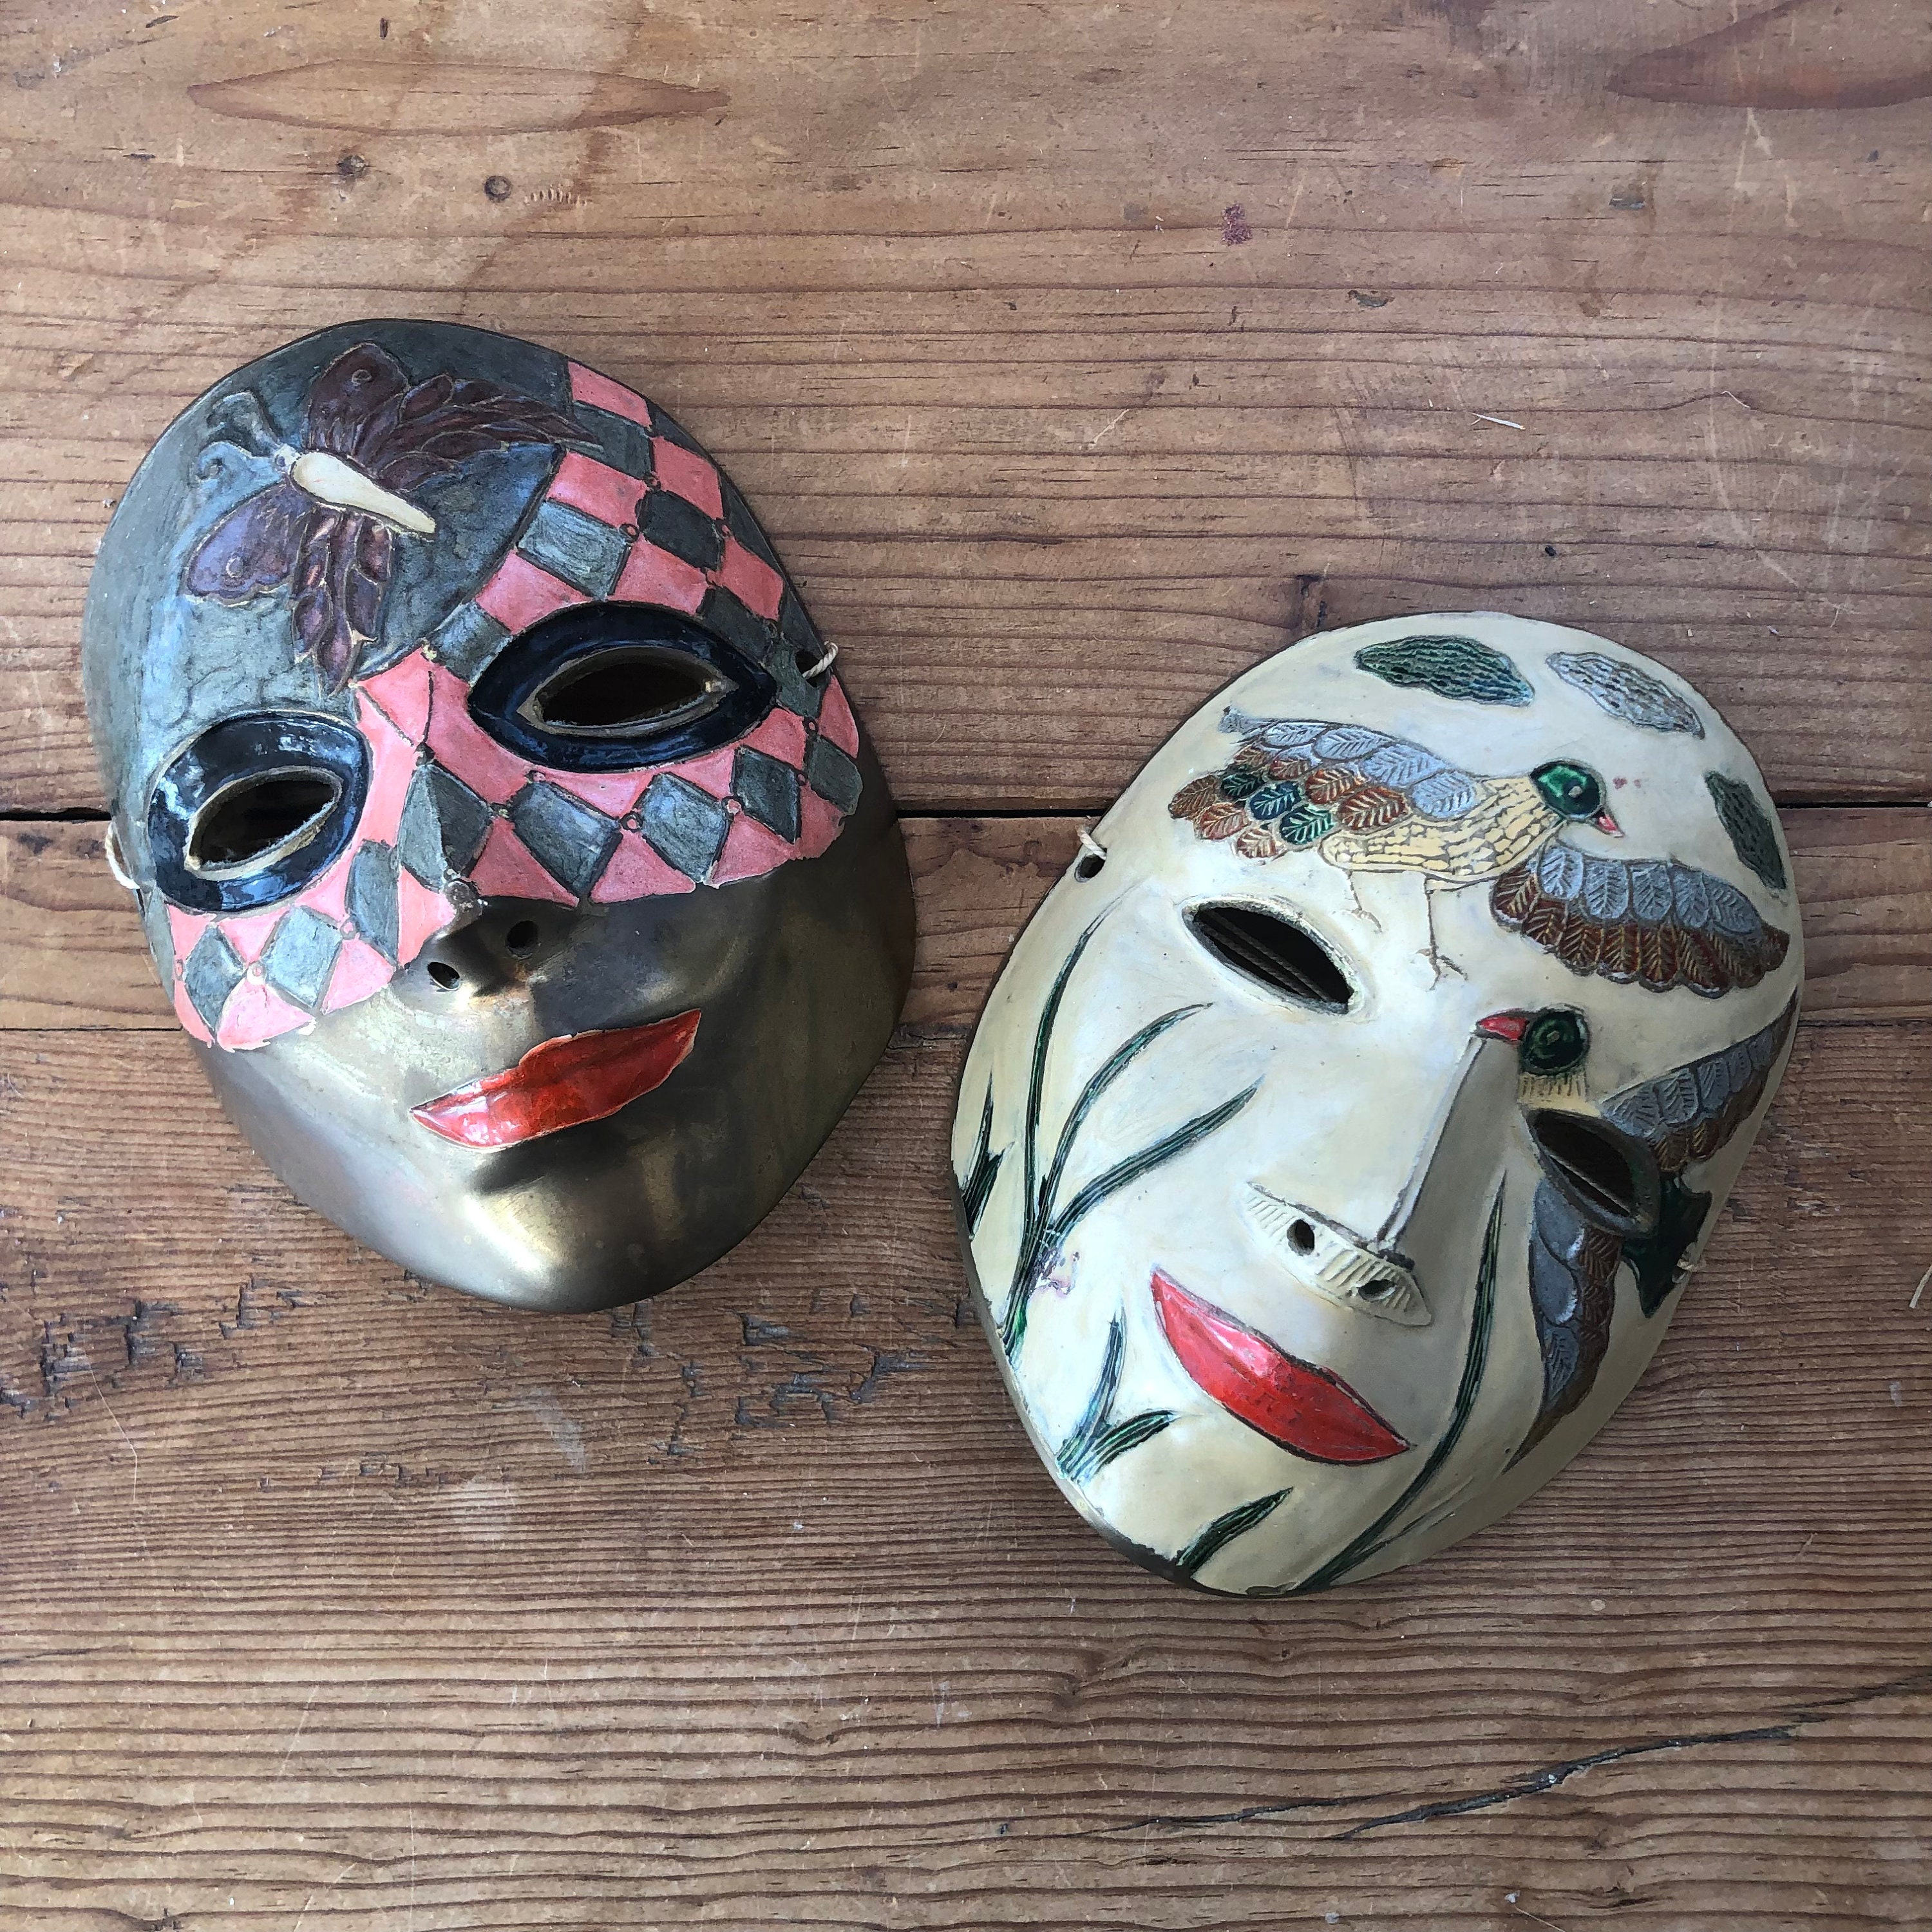 Brass Mardi Gras Mask Vintage Masquerade Wall Decor Theater